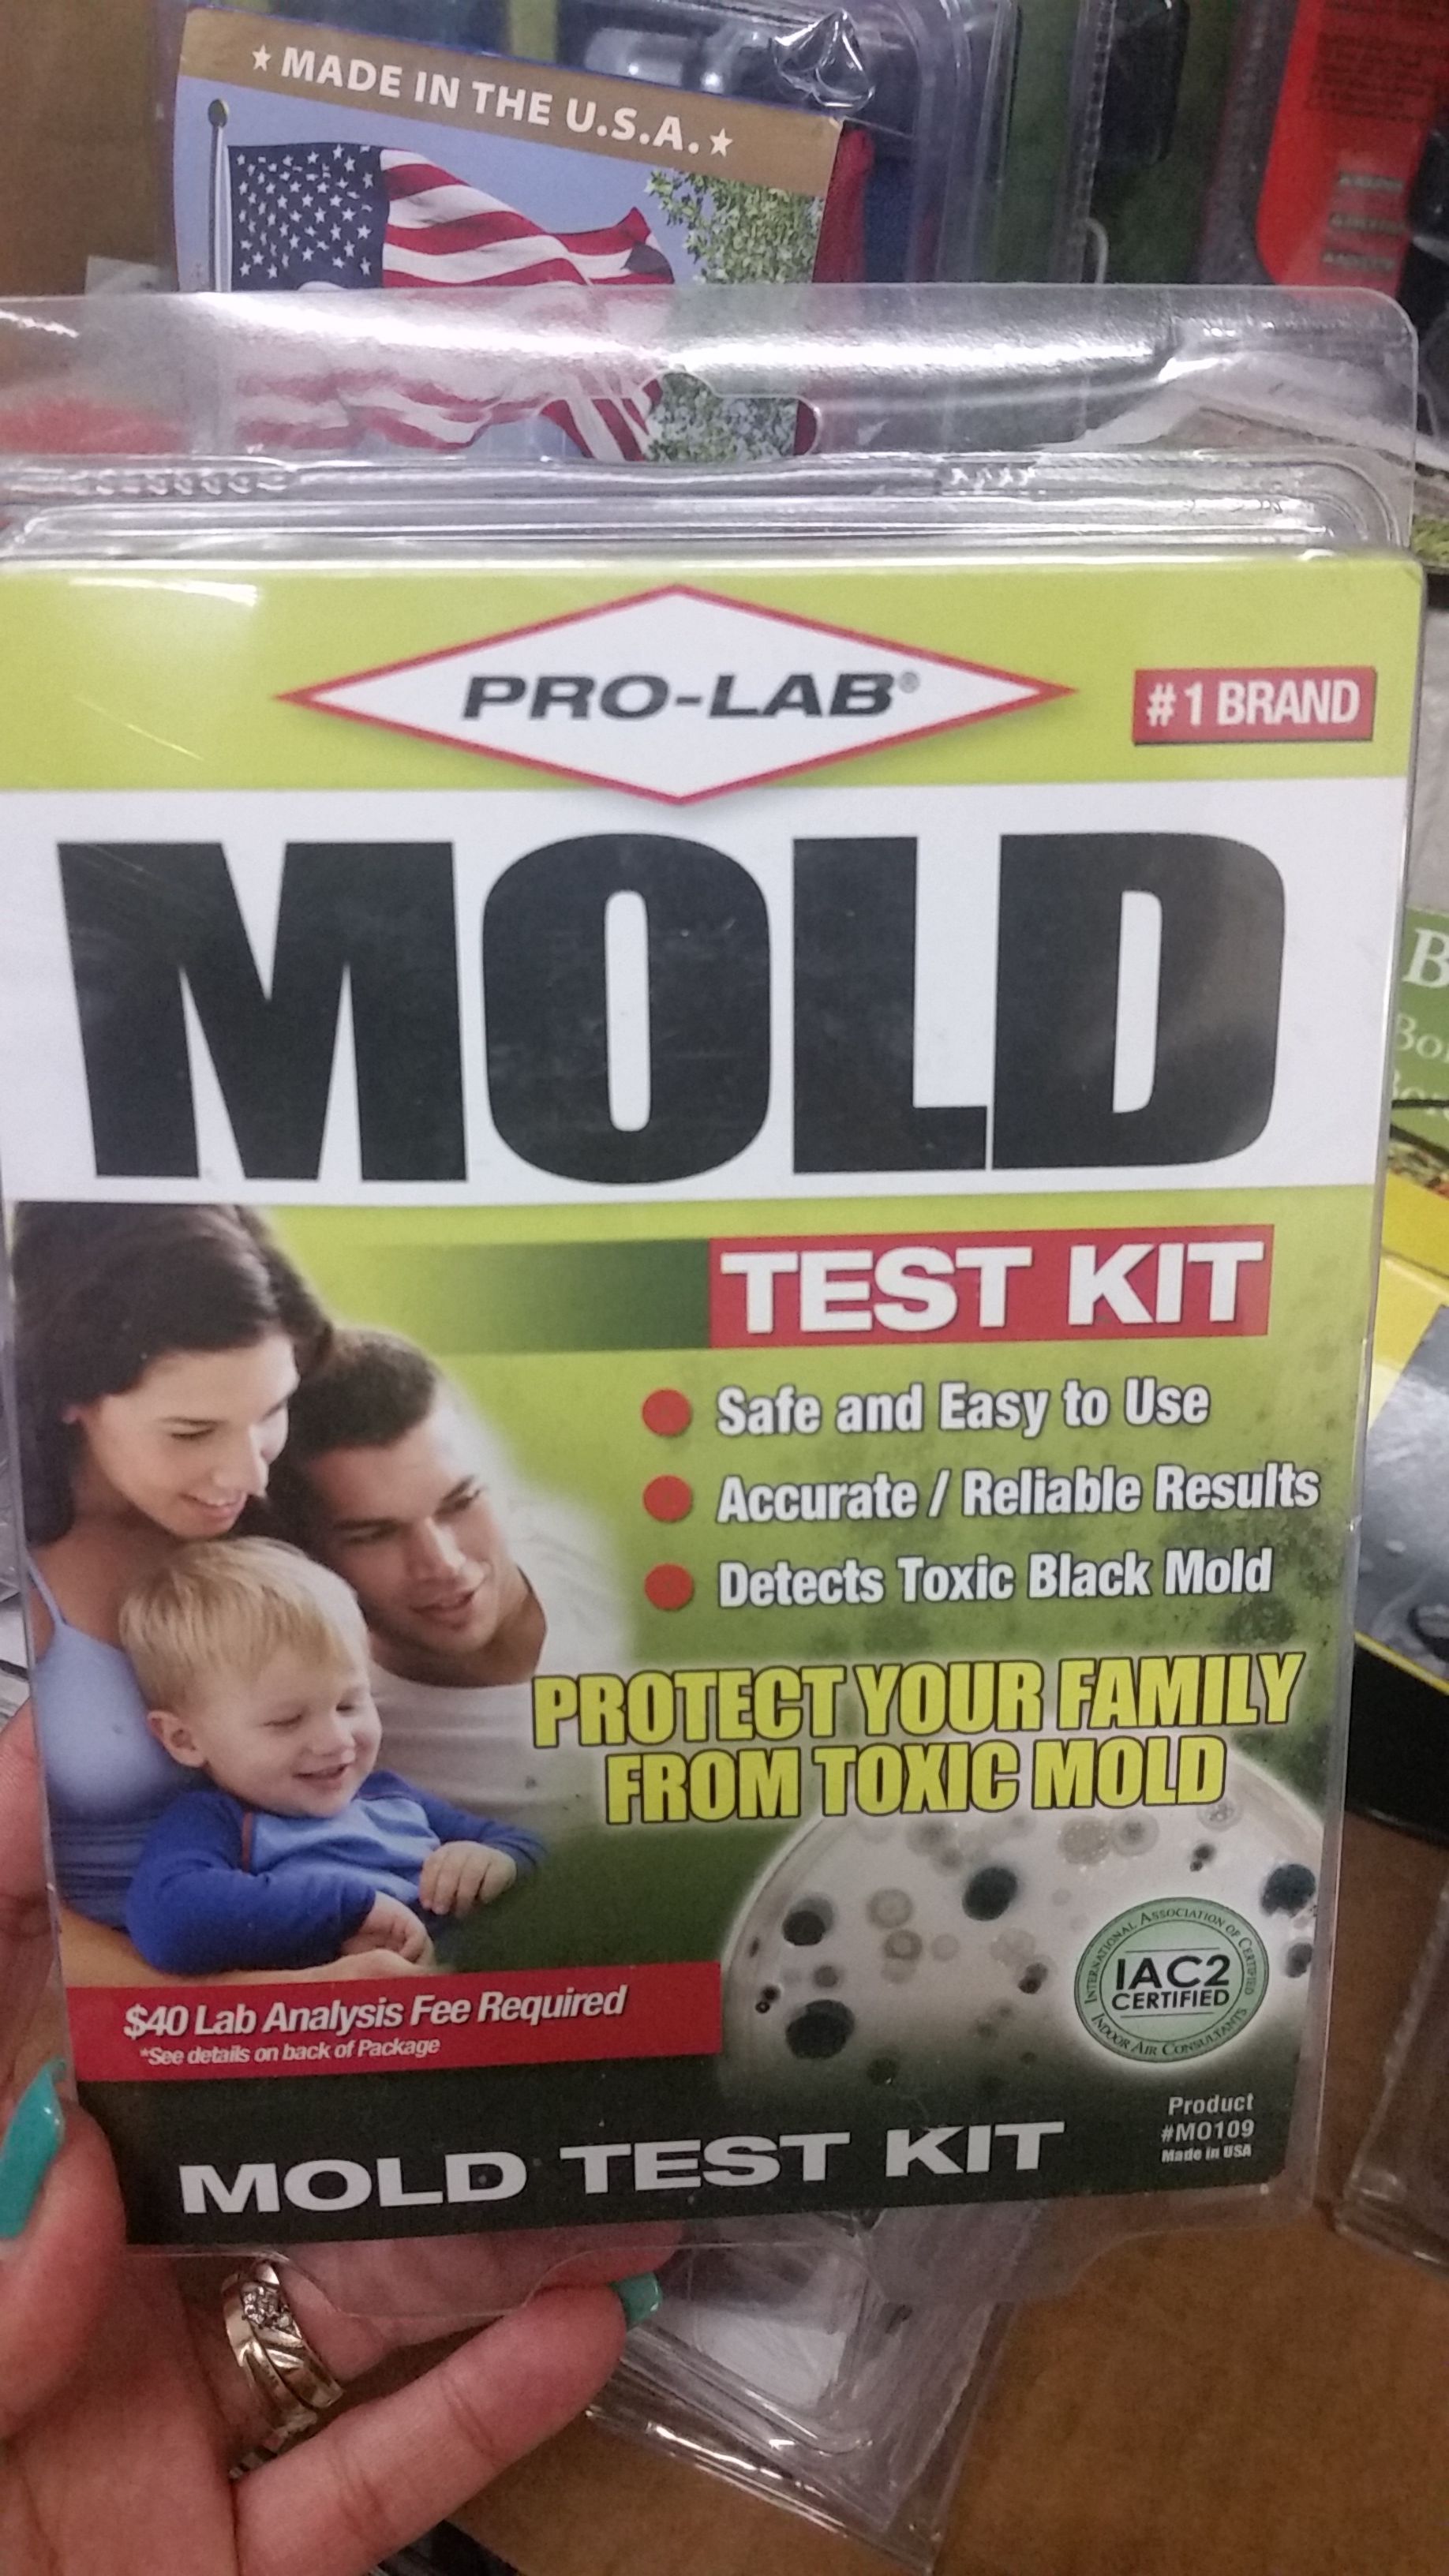 Brand new mold tester